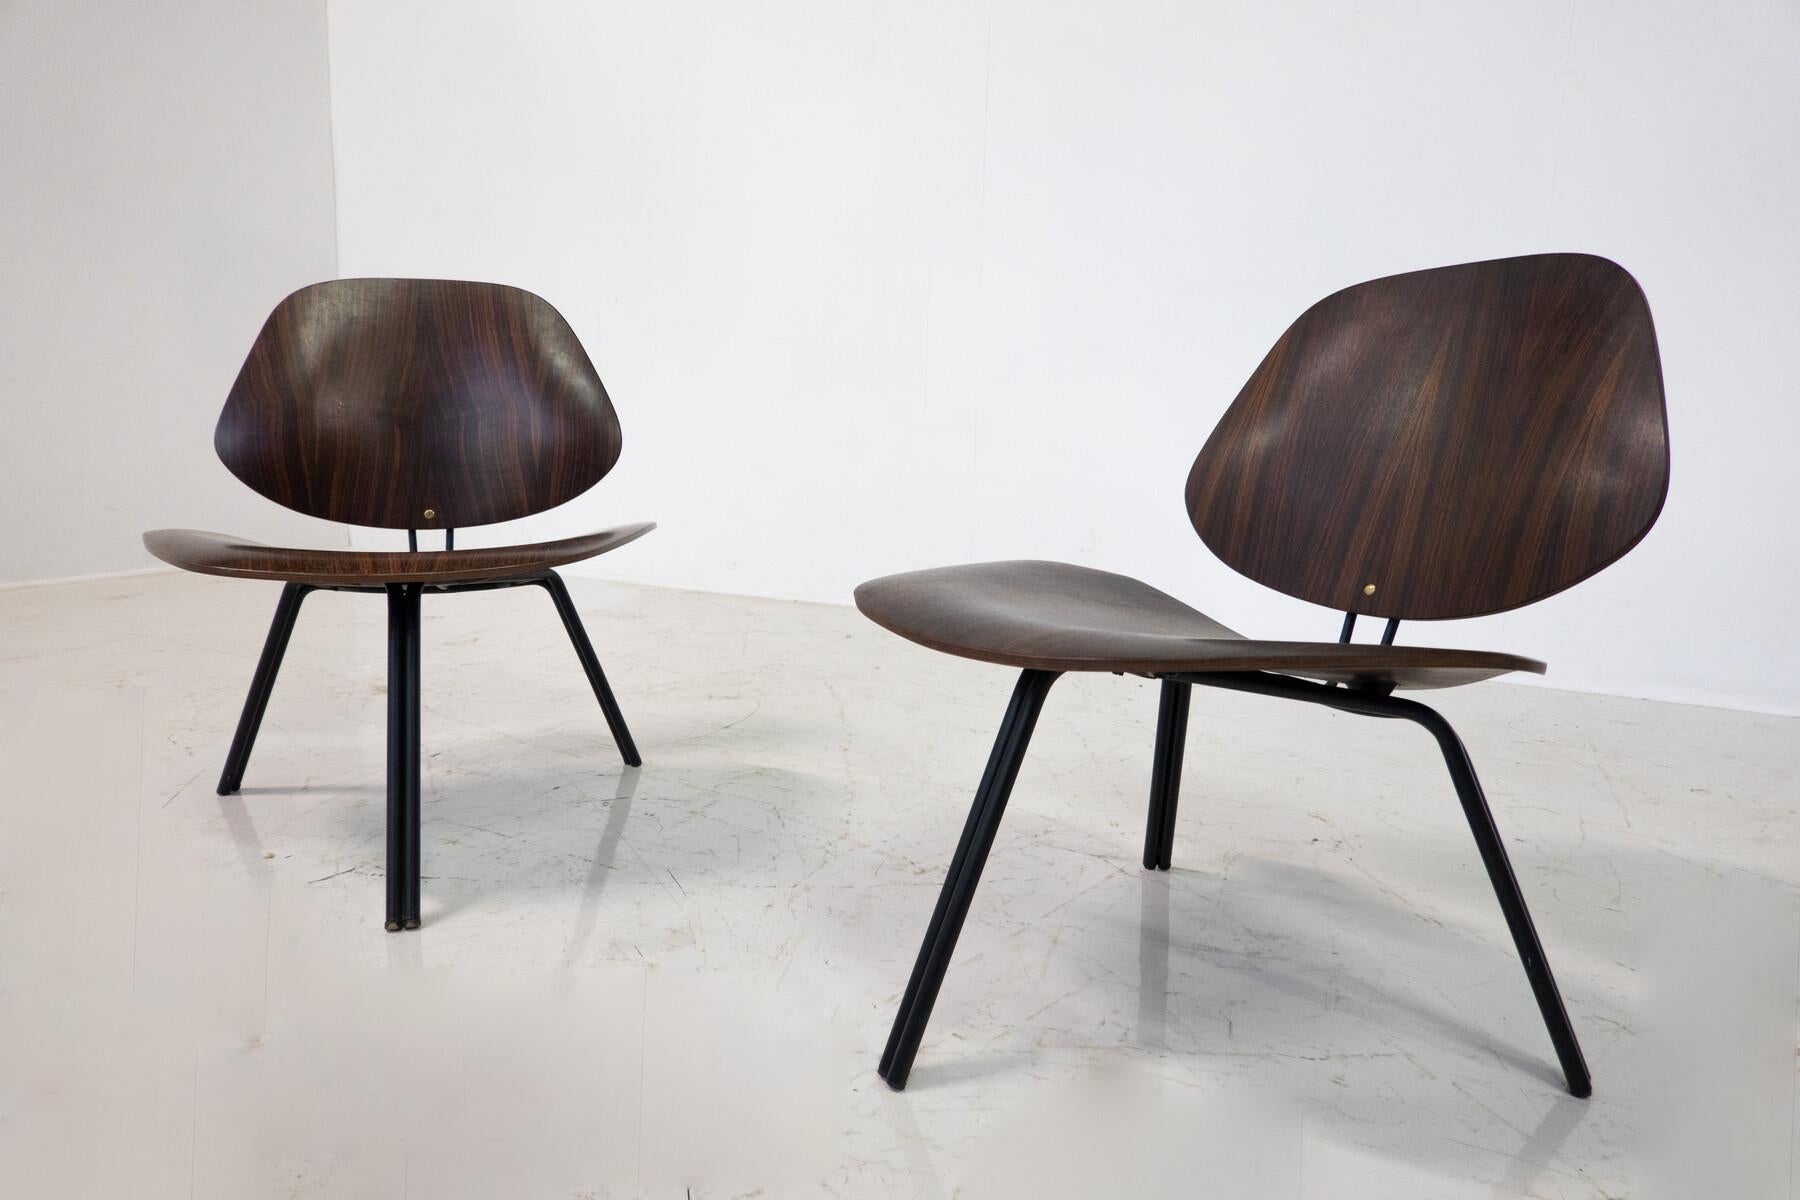 Wood Mid-Century Modern P31 Chairs by Osvaldo Borsani, Tecno, 1950s For Sale